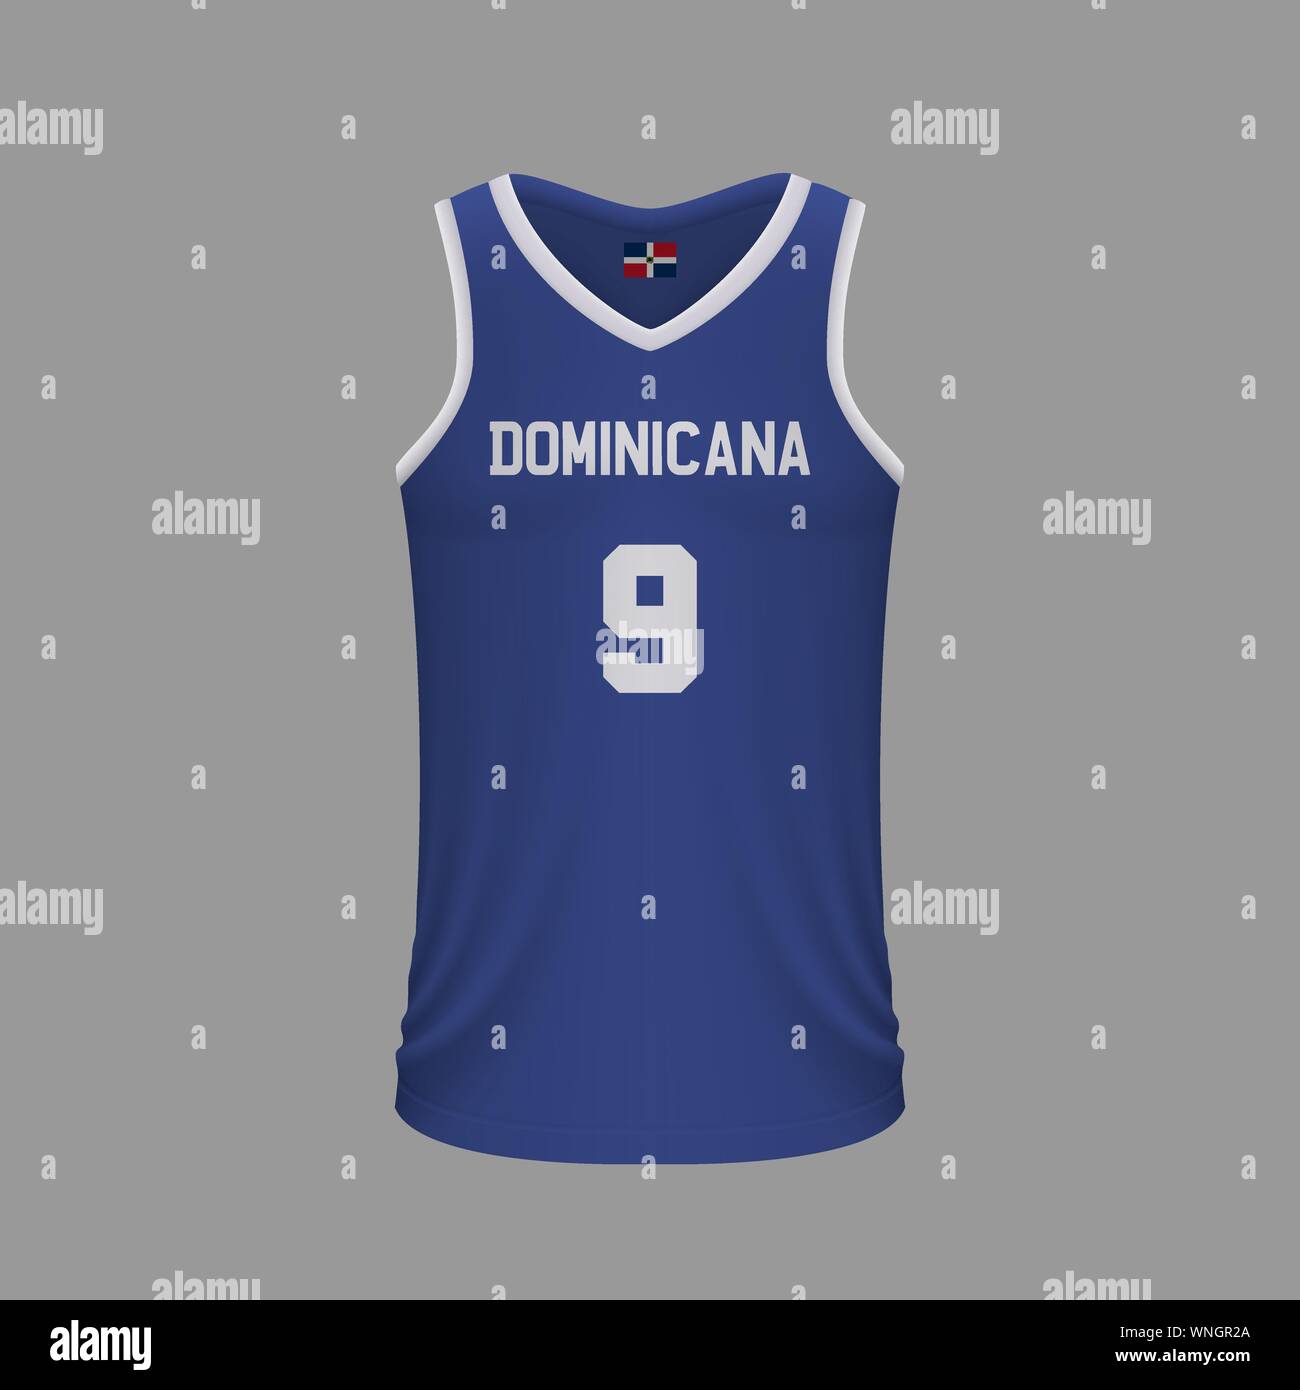 dominican republic basketball jersey